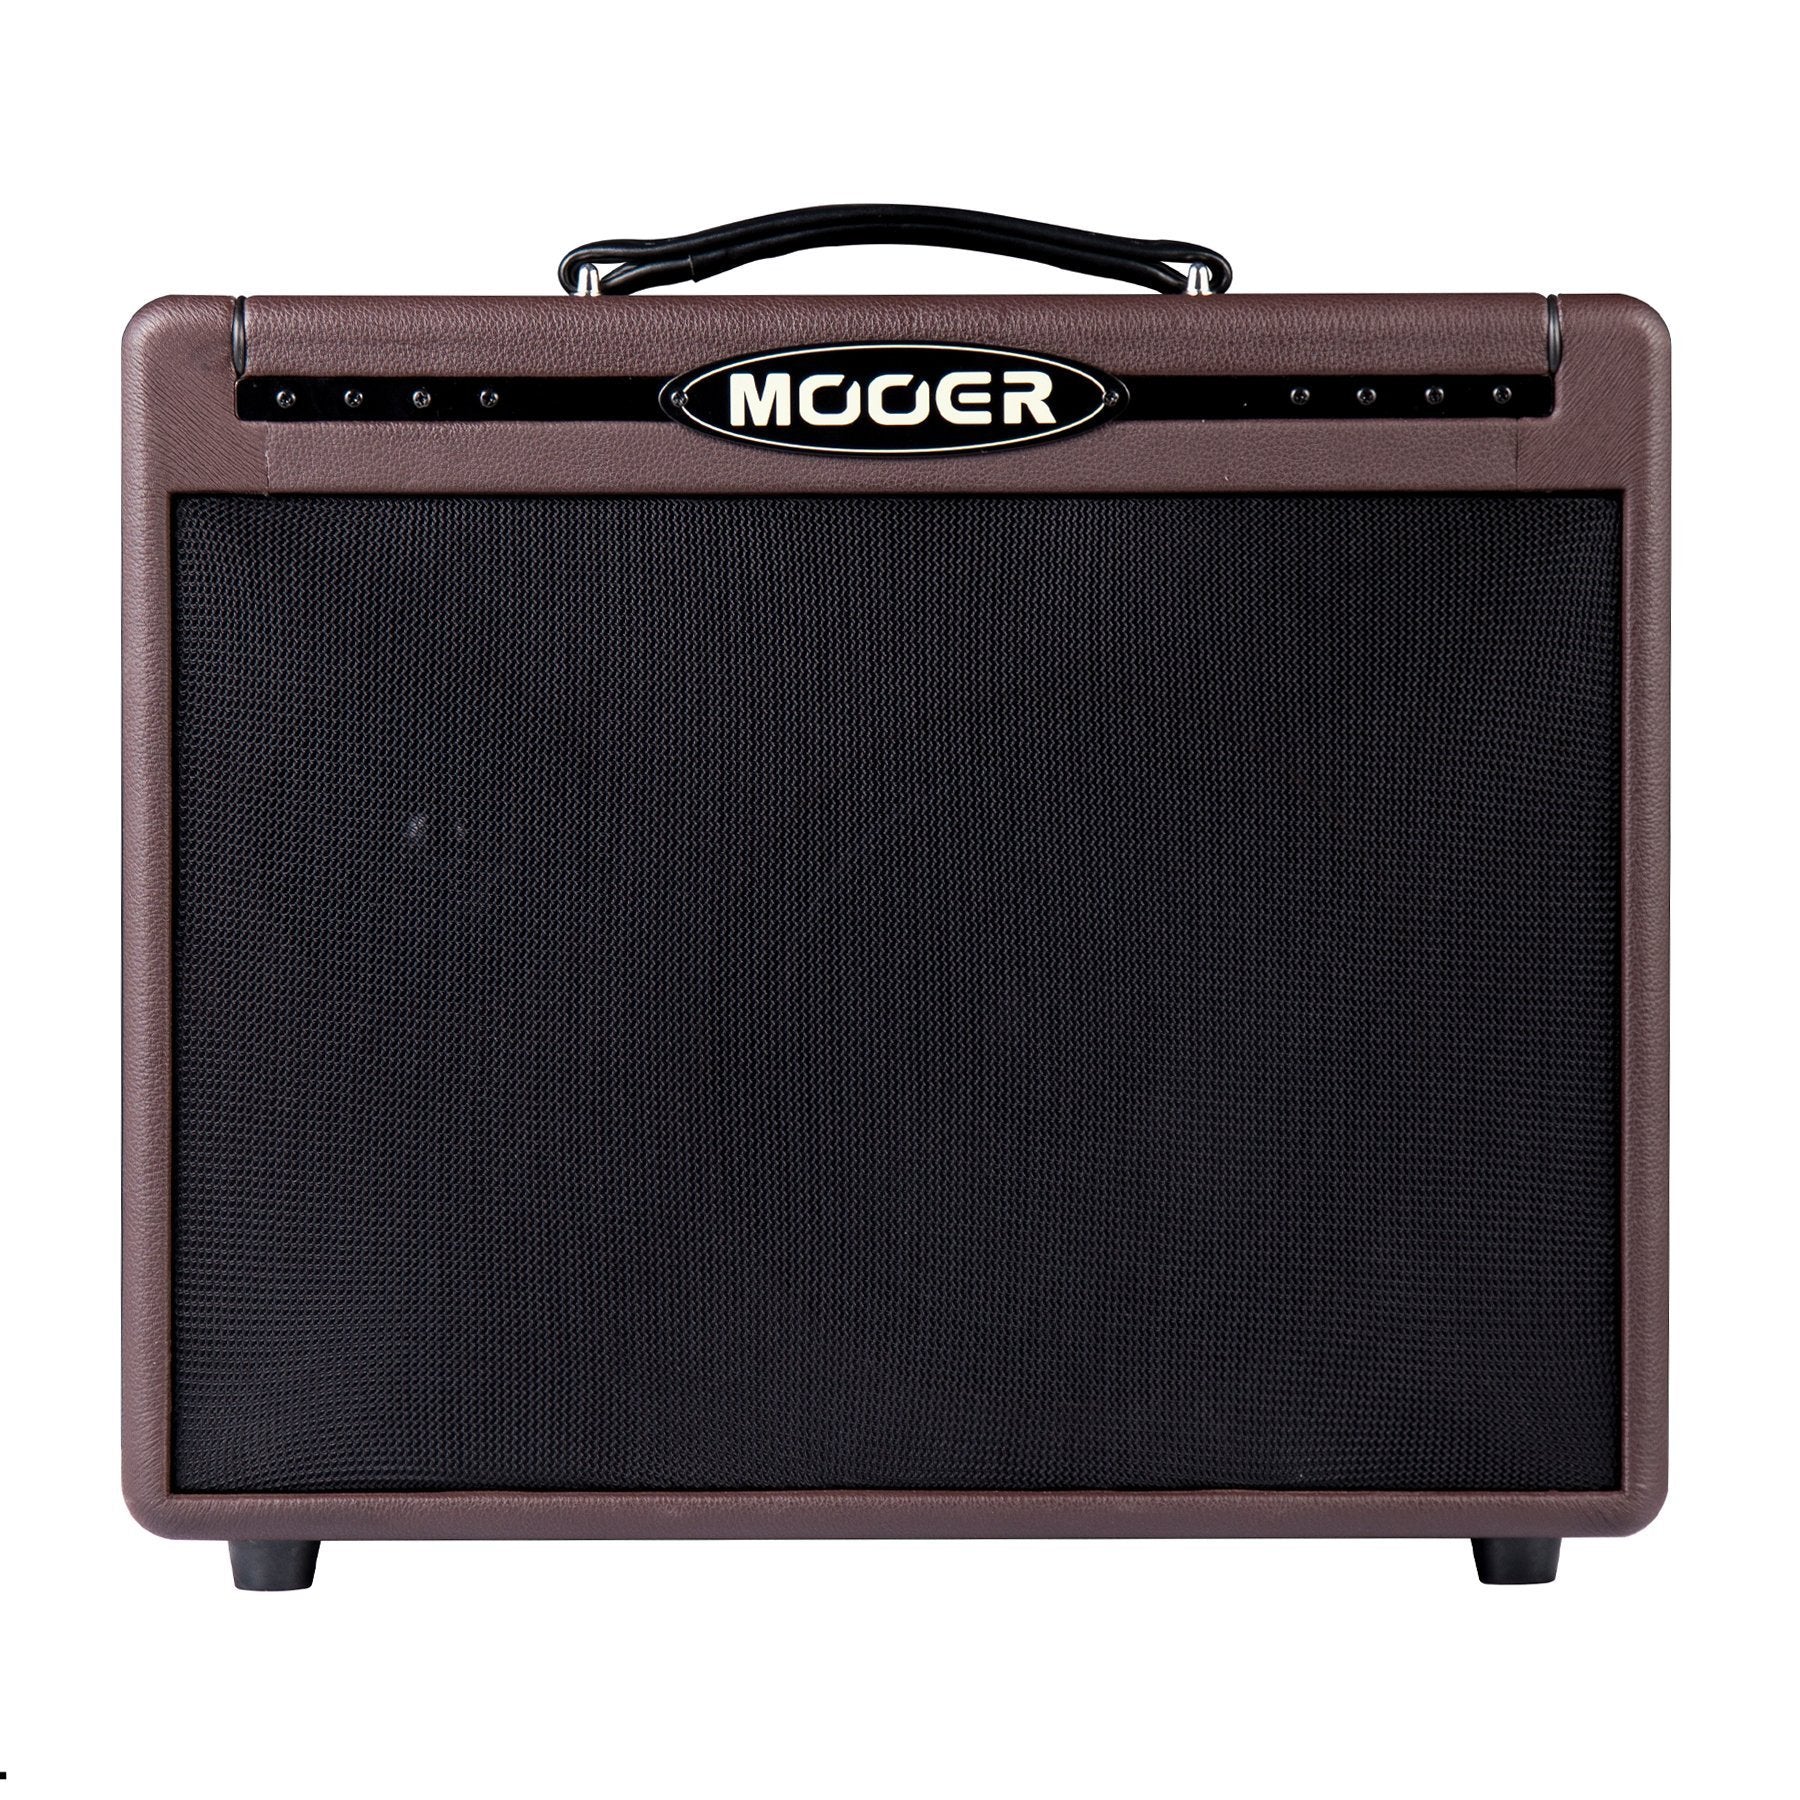 Mooer 'Shadow' SD50A 50 Watt Acoustic Guitar Amplifier-MEP-SD50A